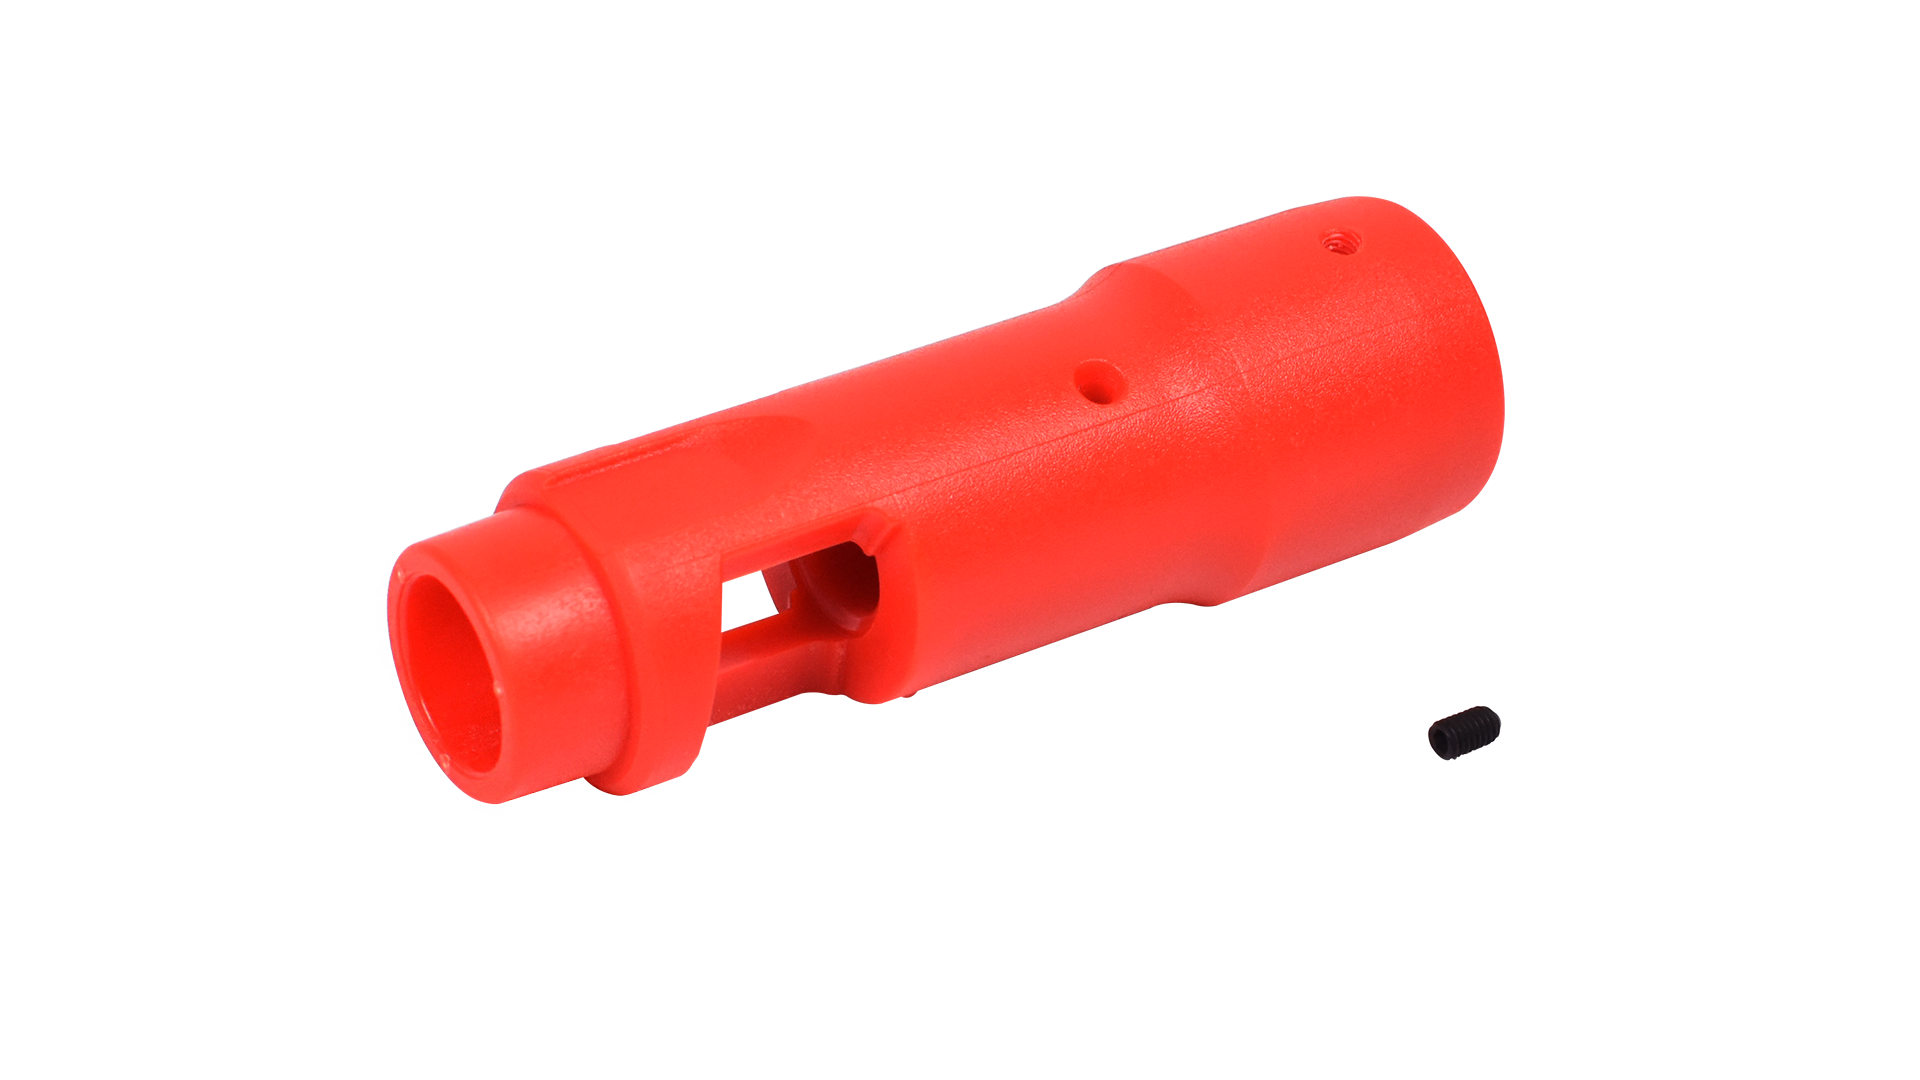 【MK-119】MAR Plastic Red Flash Hider